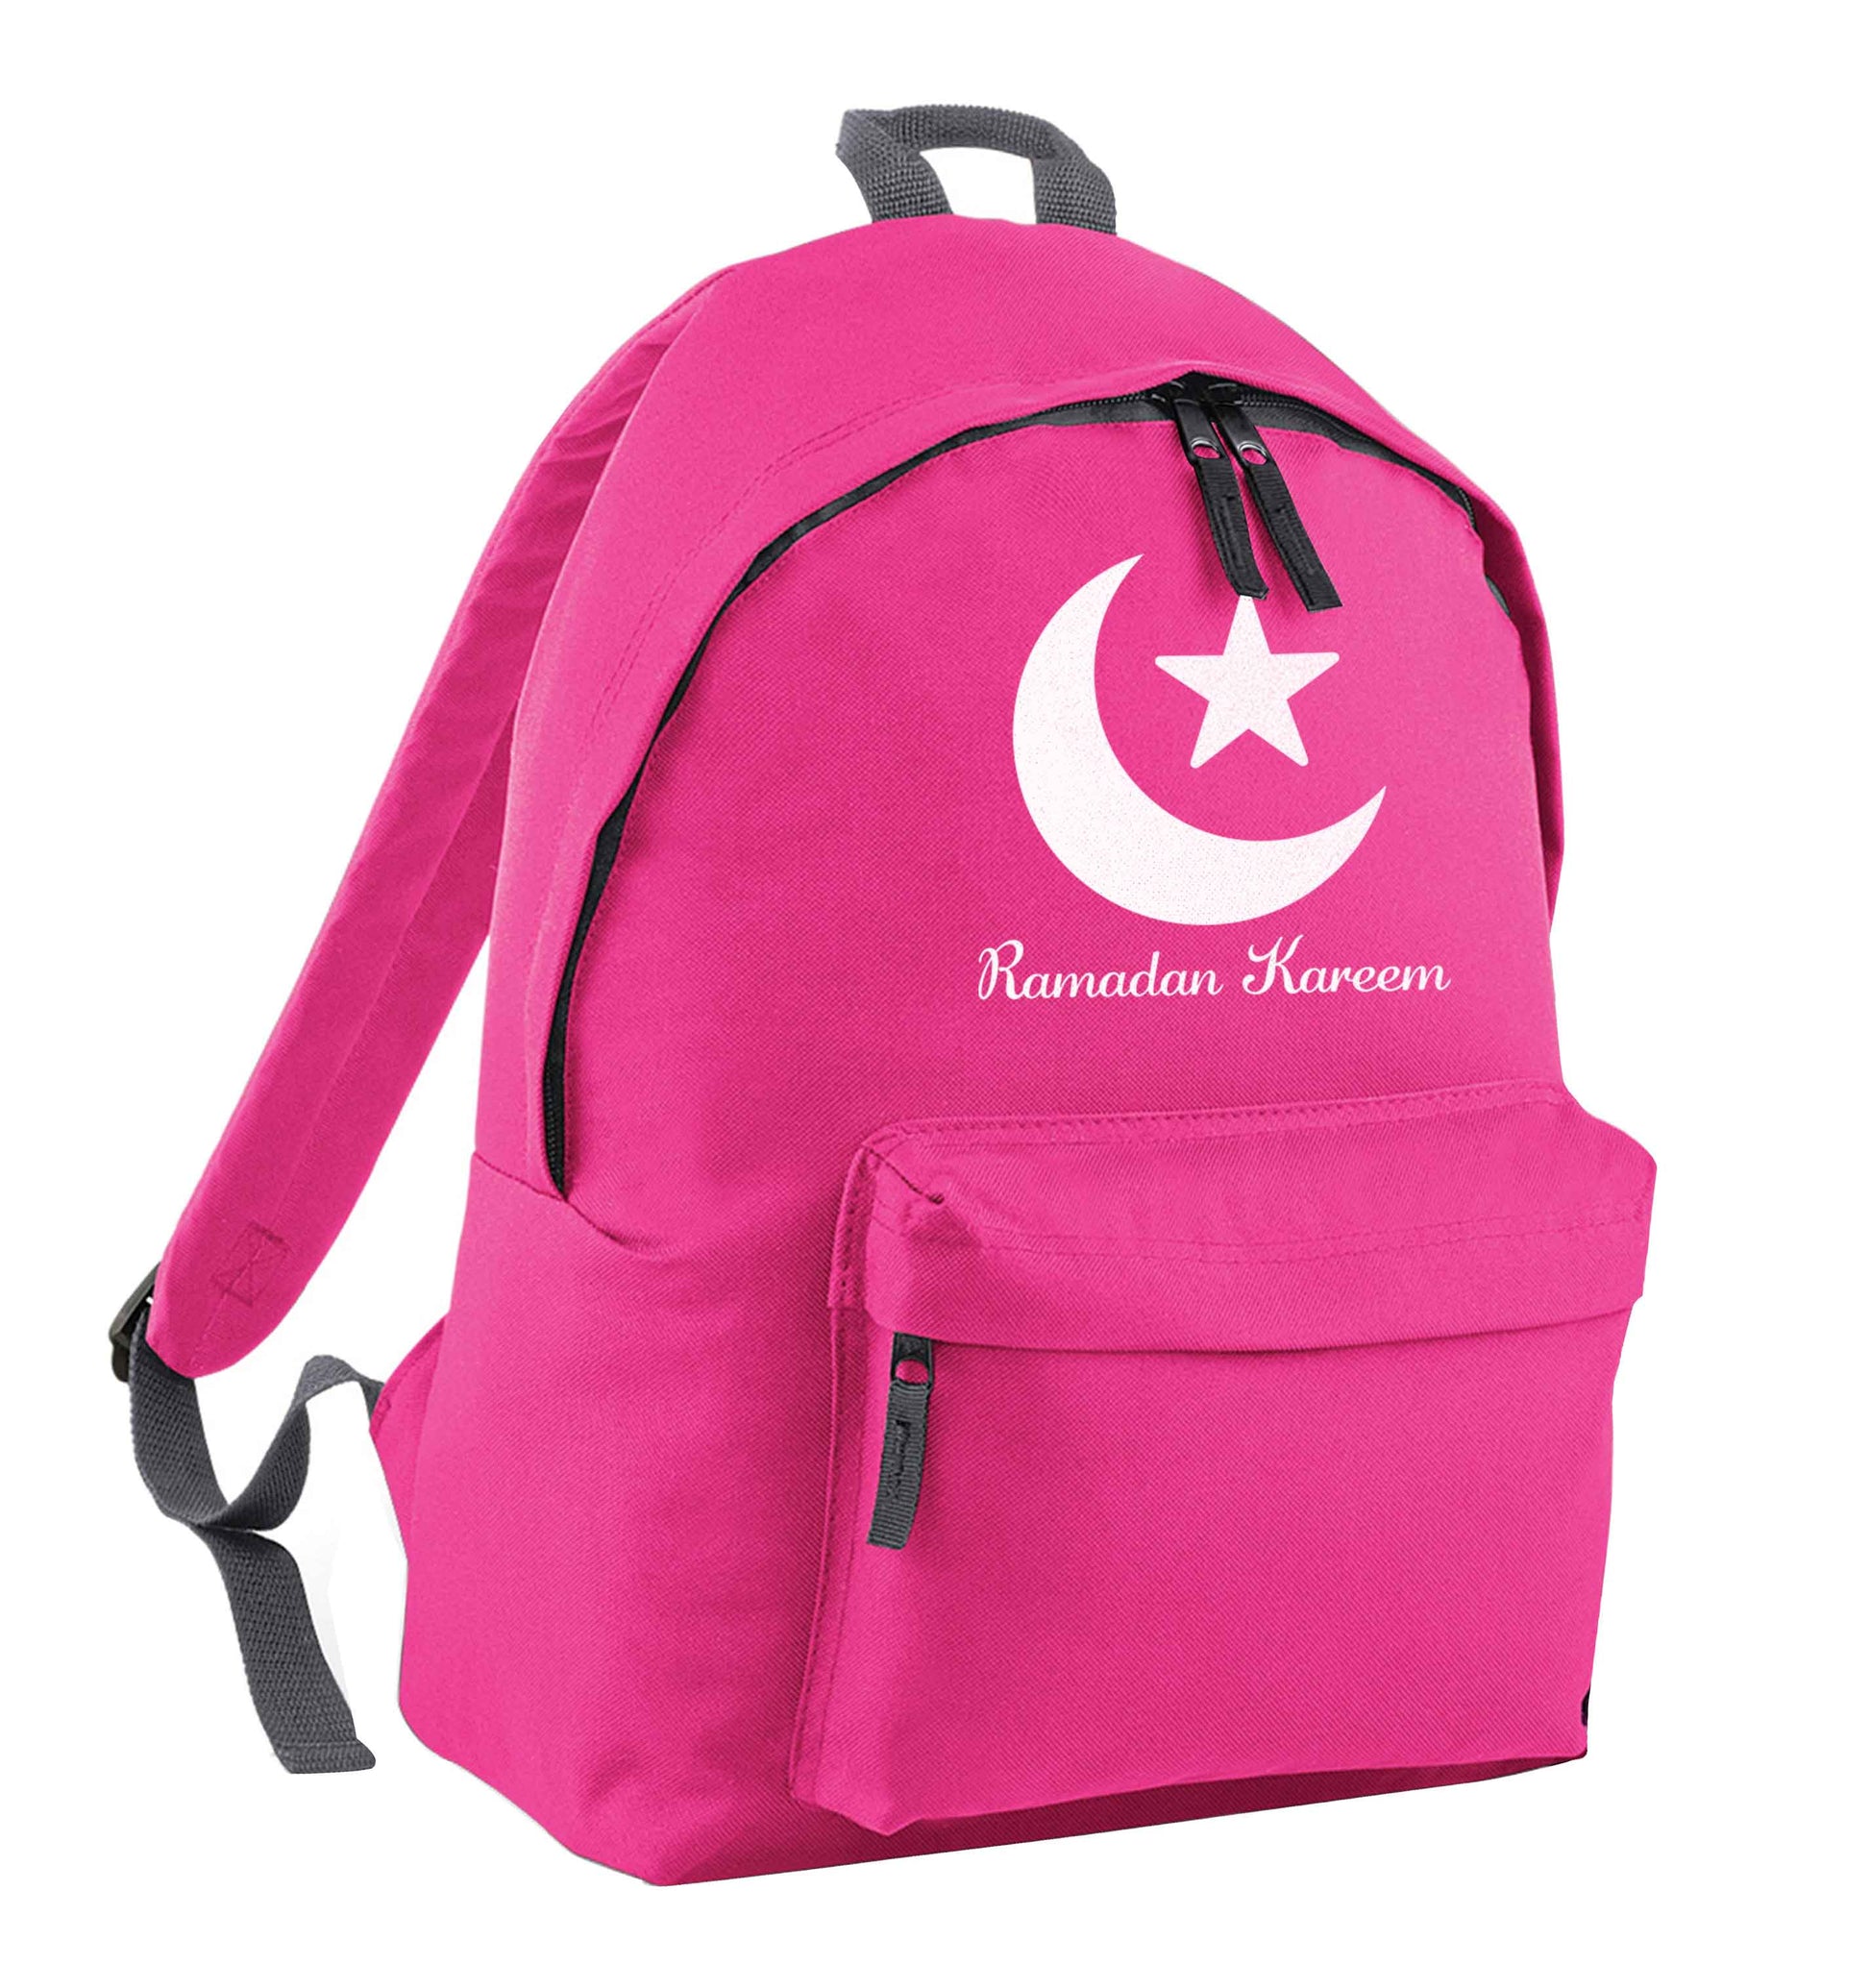 Ramadan kareem pink adults backpack